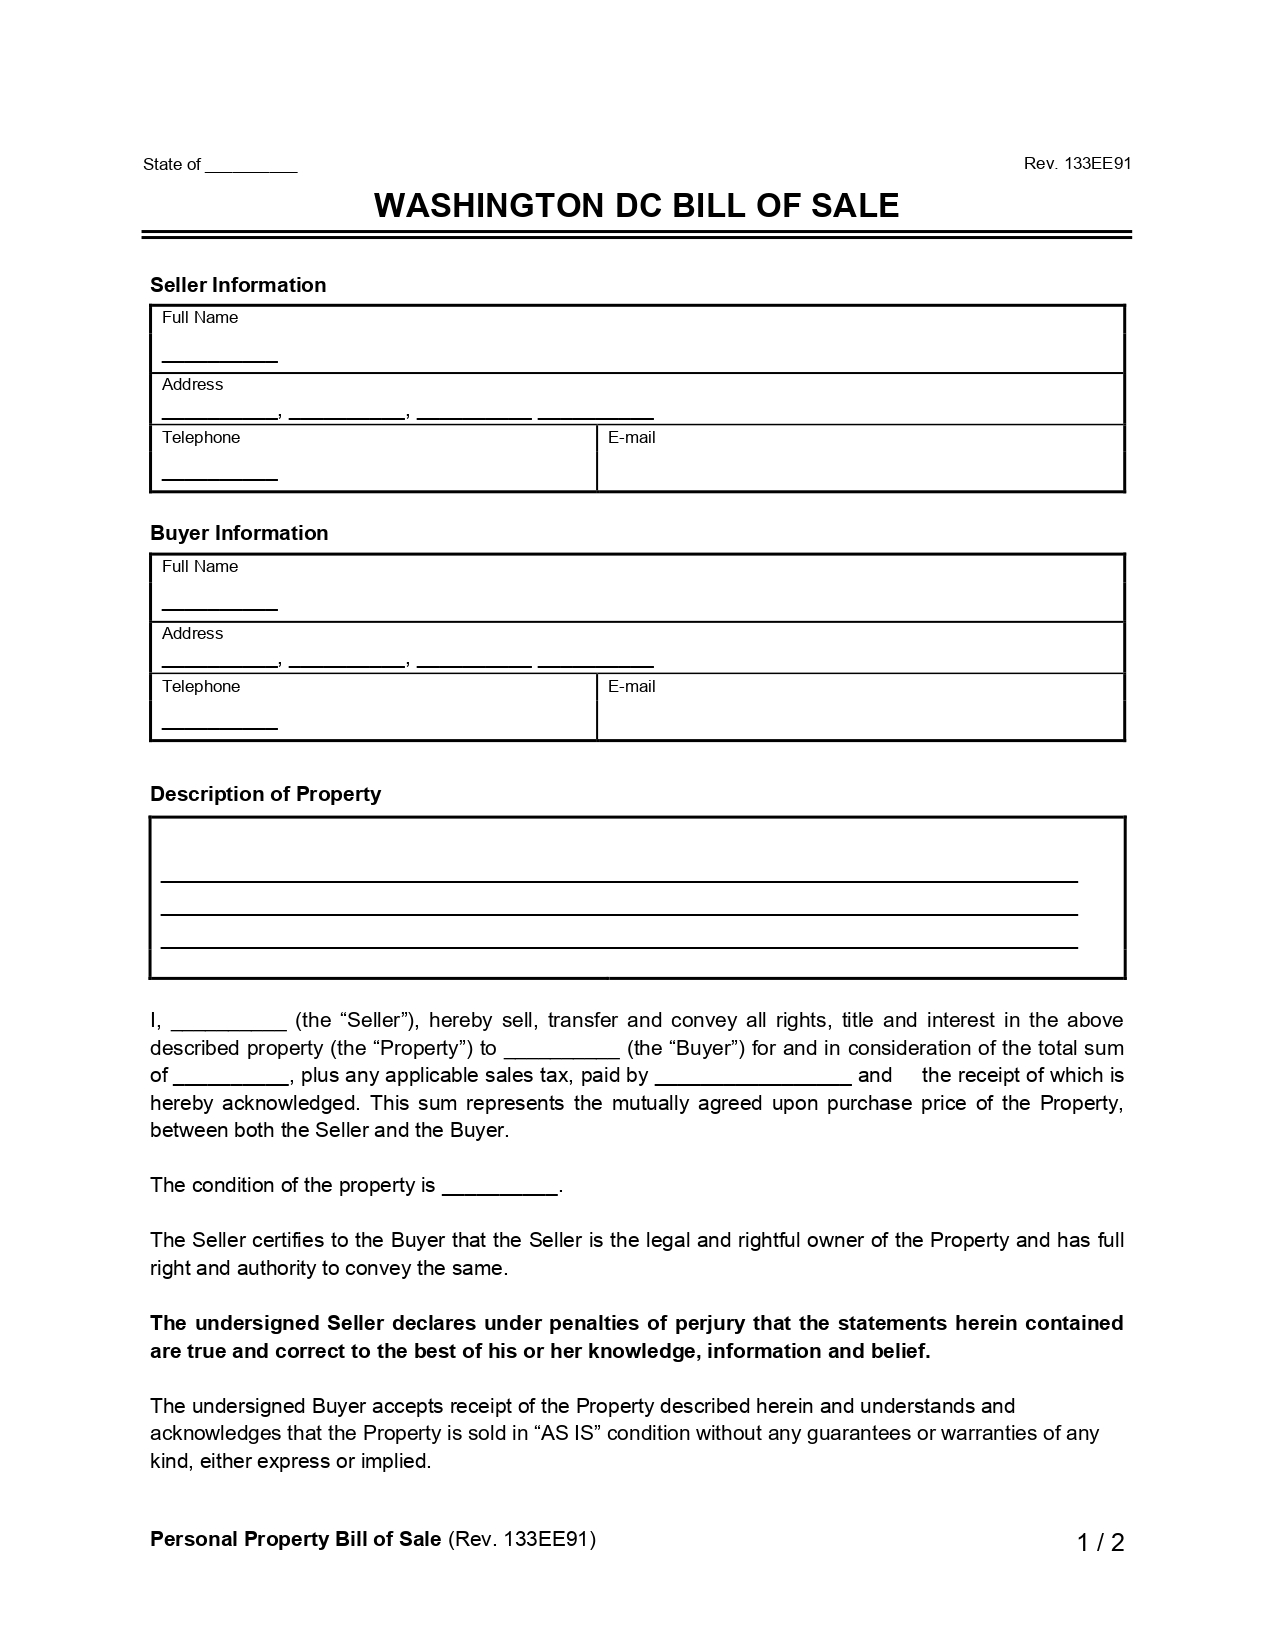 Washington DC Bill of Sale